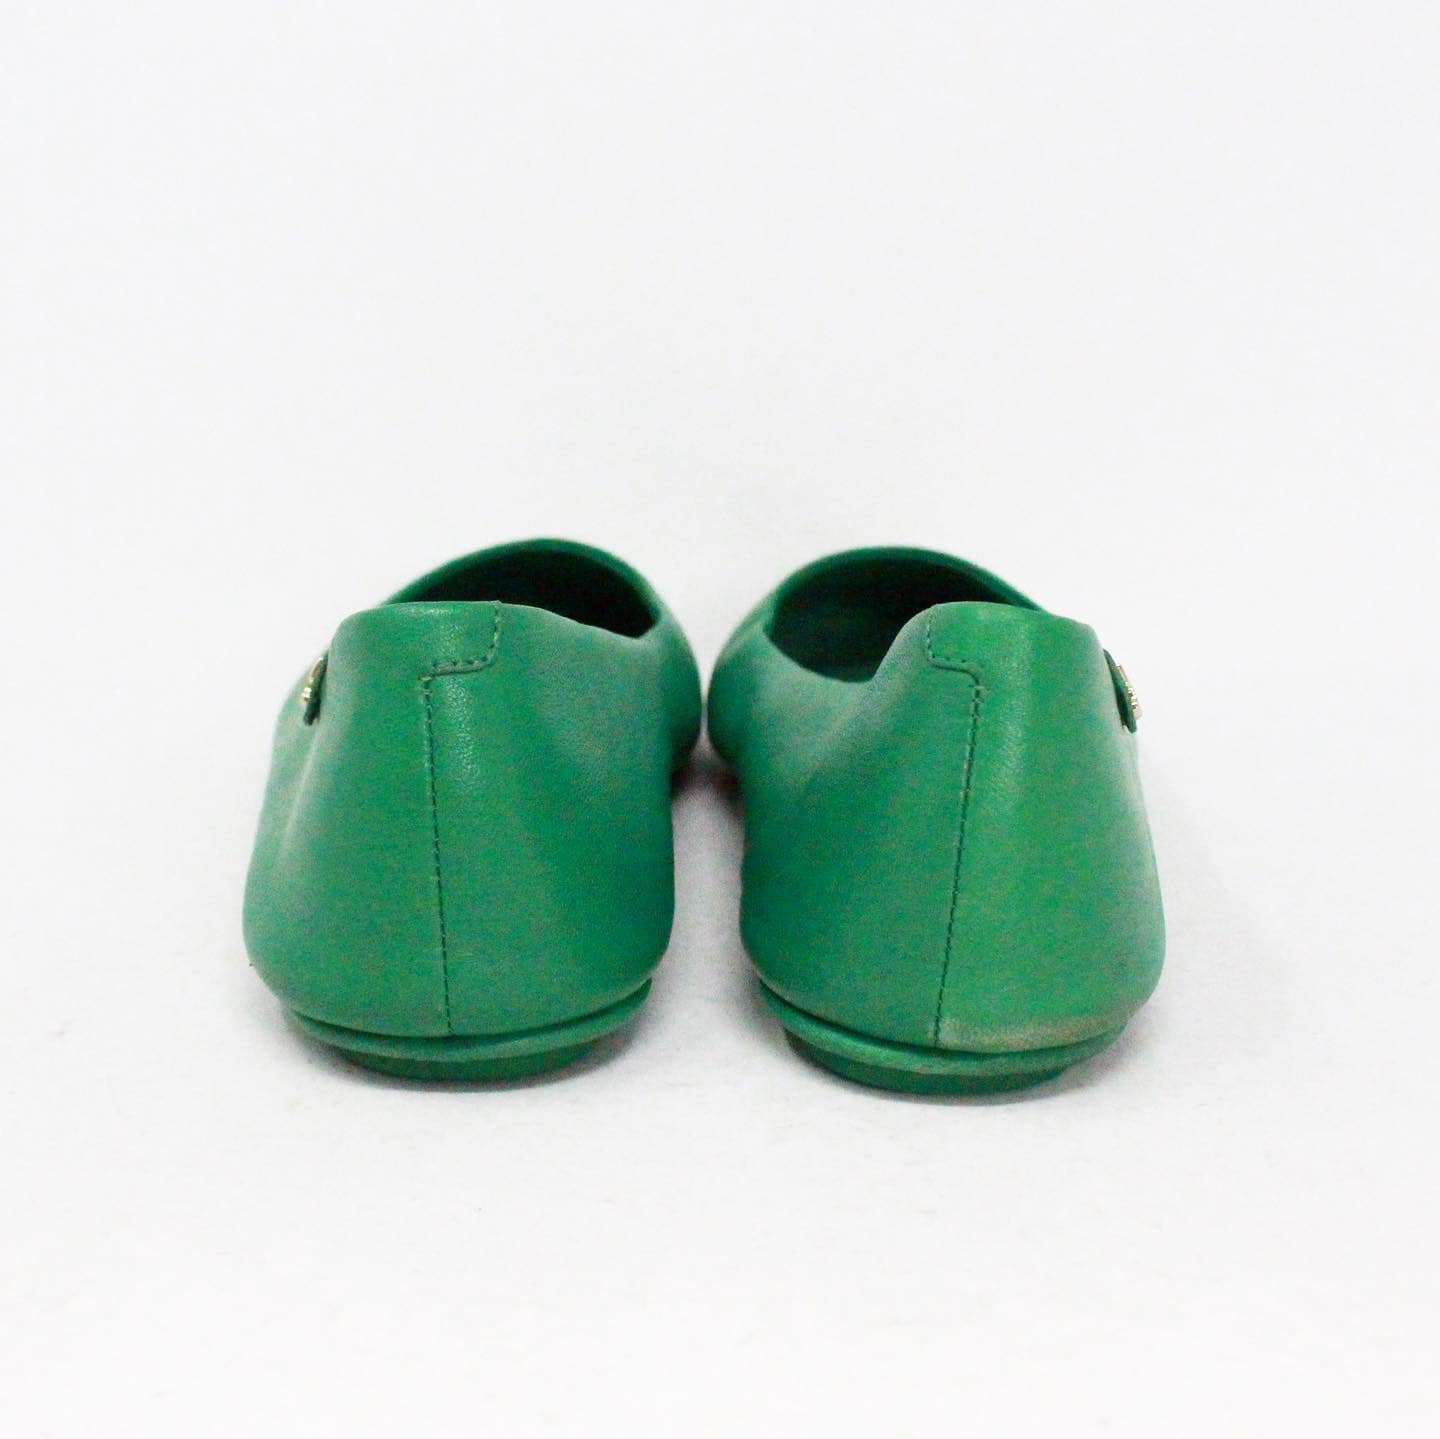 TORY BURCH Emerald Stone Soft Nappa Leather Travel Ballet Flats US 8 EU 38 item 41096 c